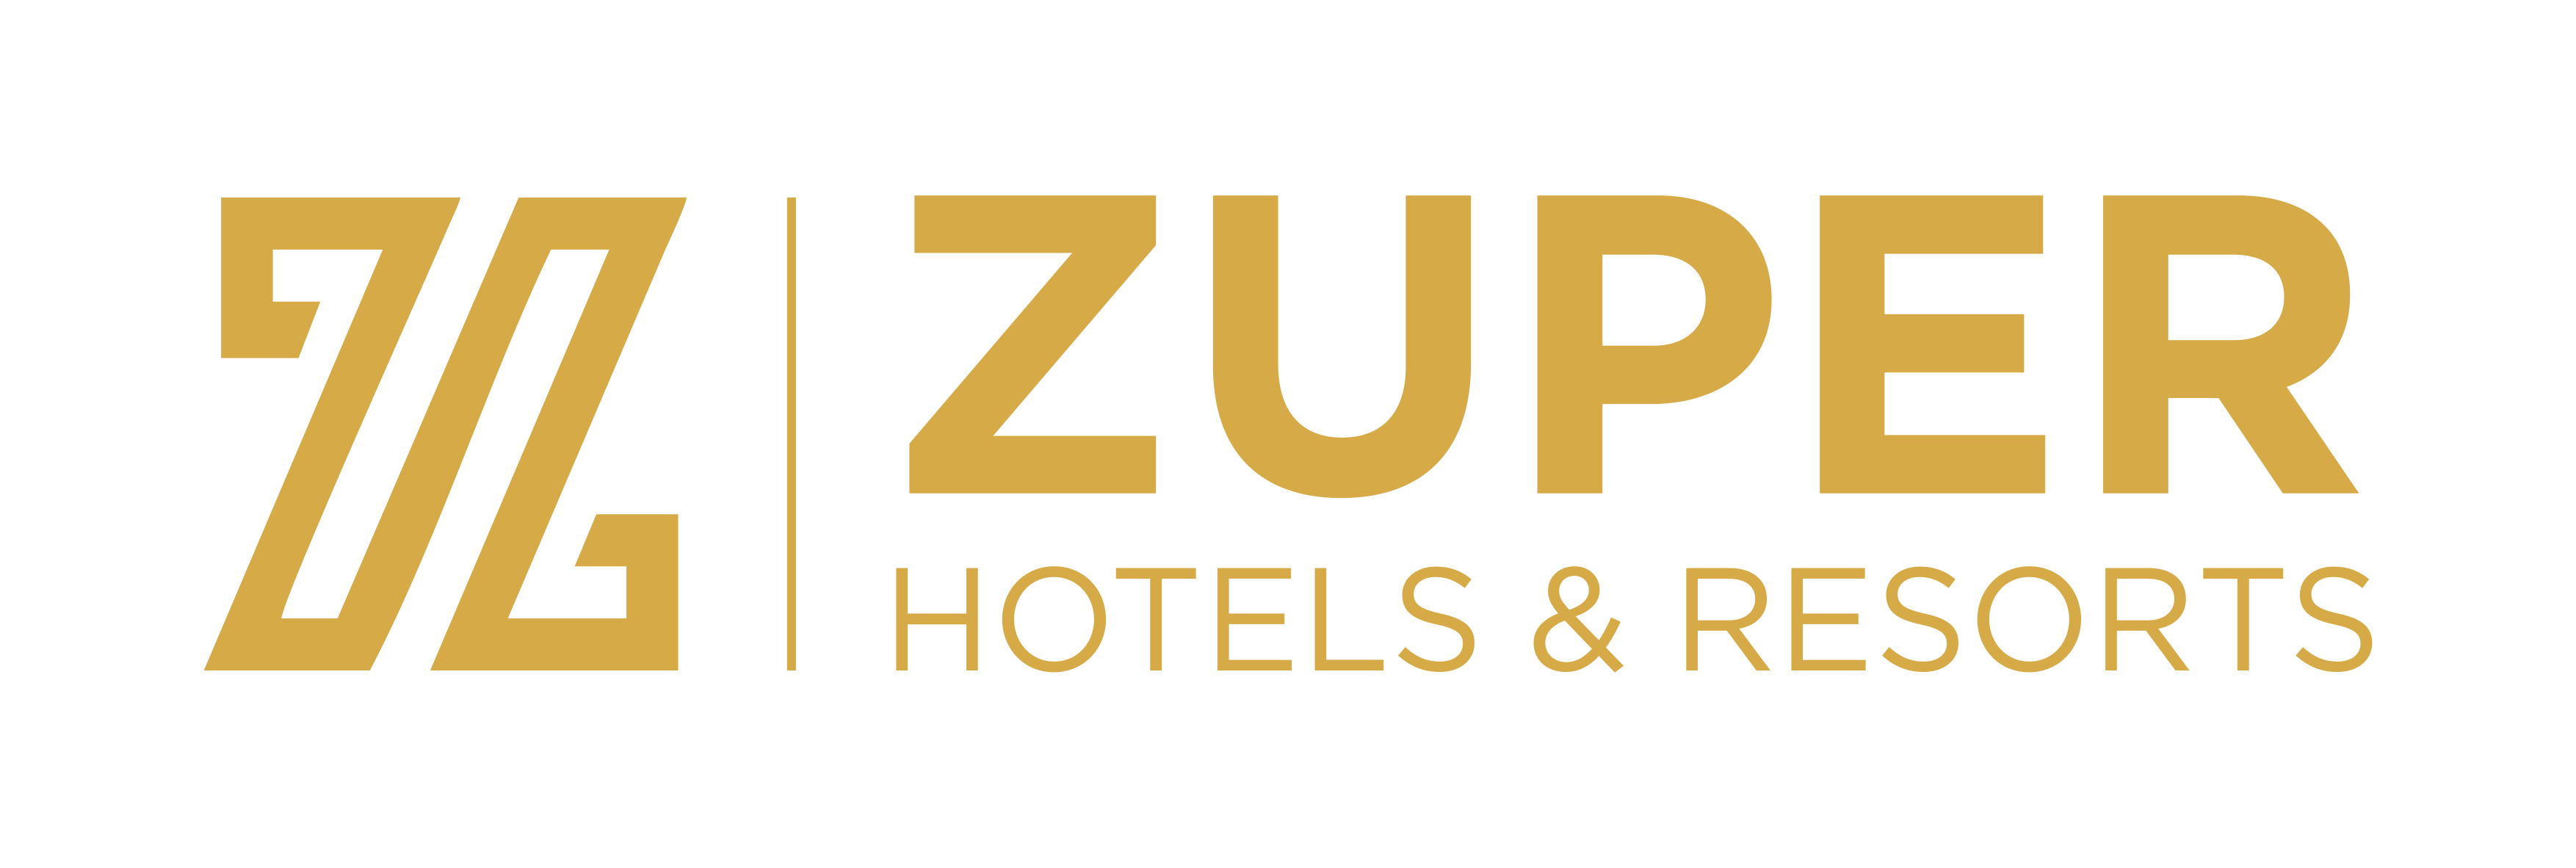 Top Resort Marketing by Zuper Hotels & Resorts